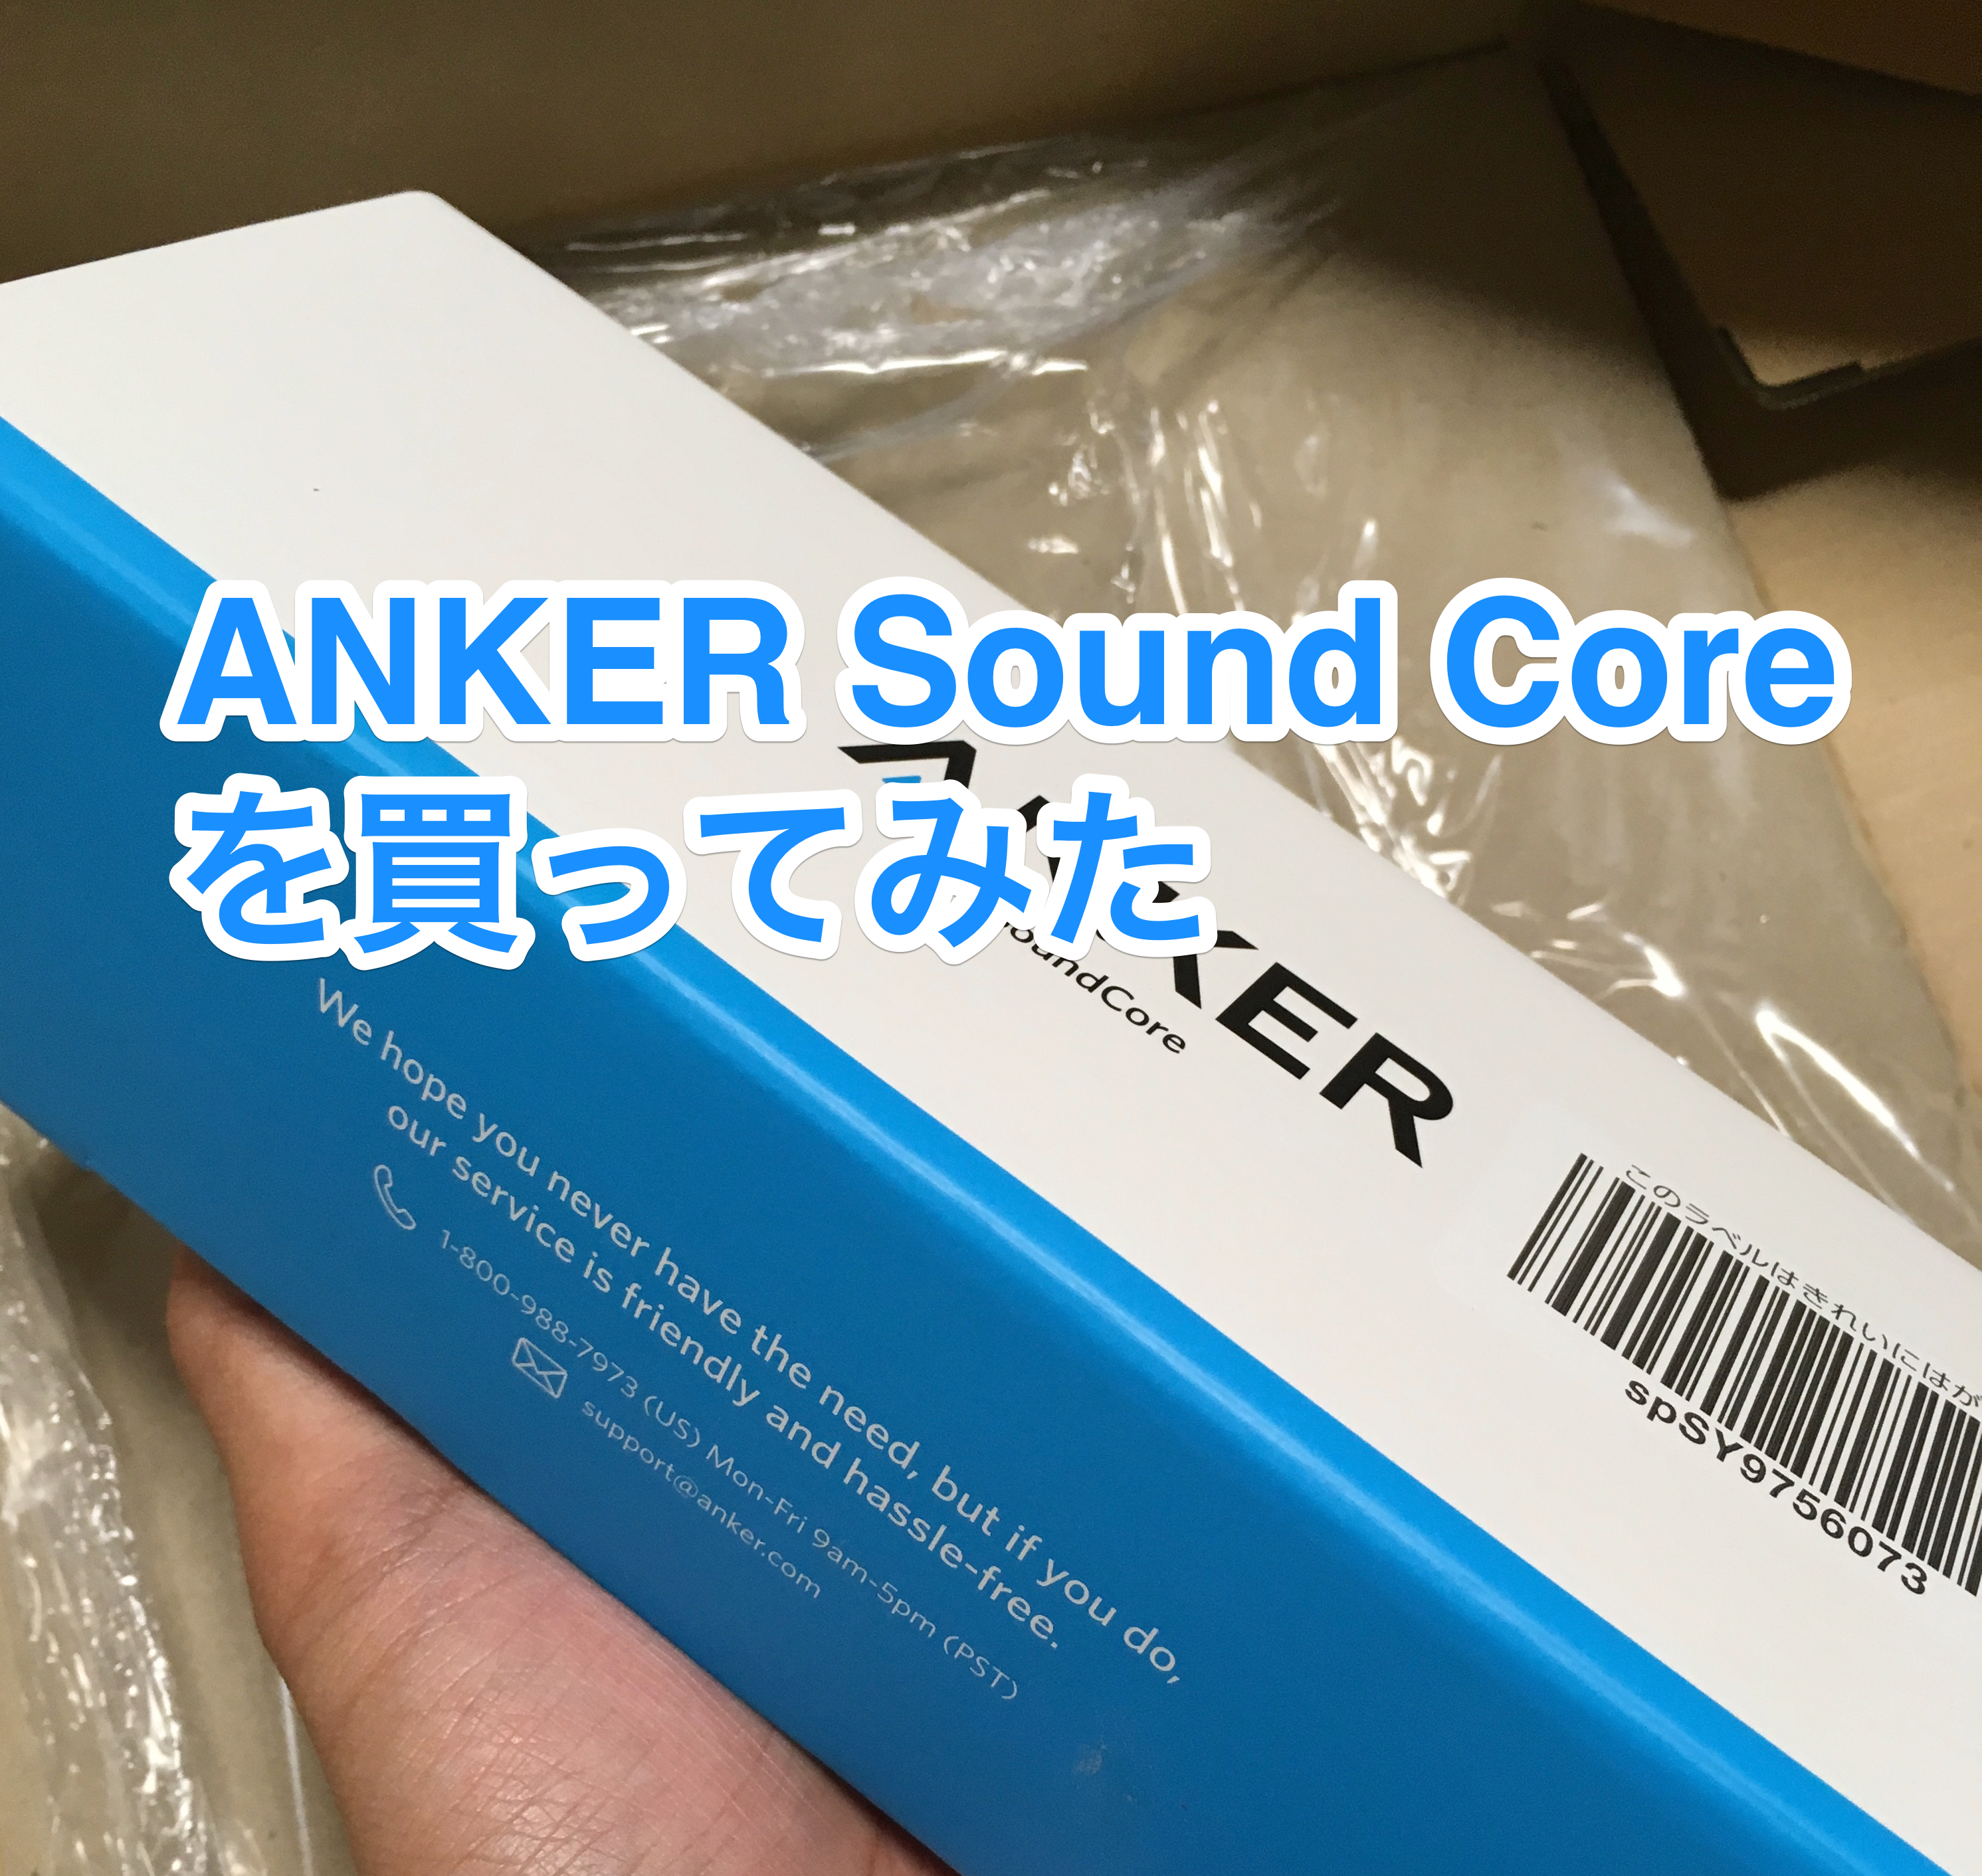 ANKER Sound Core を買ってみた